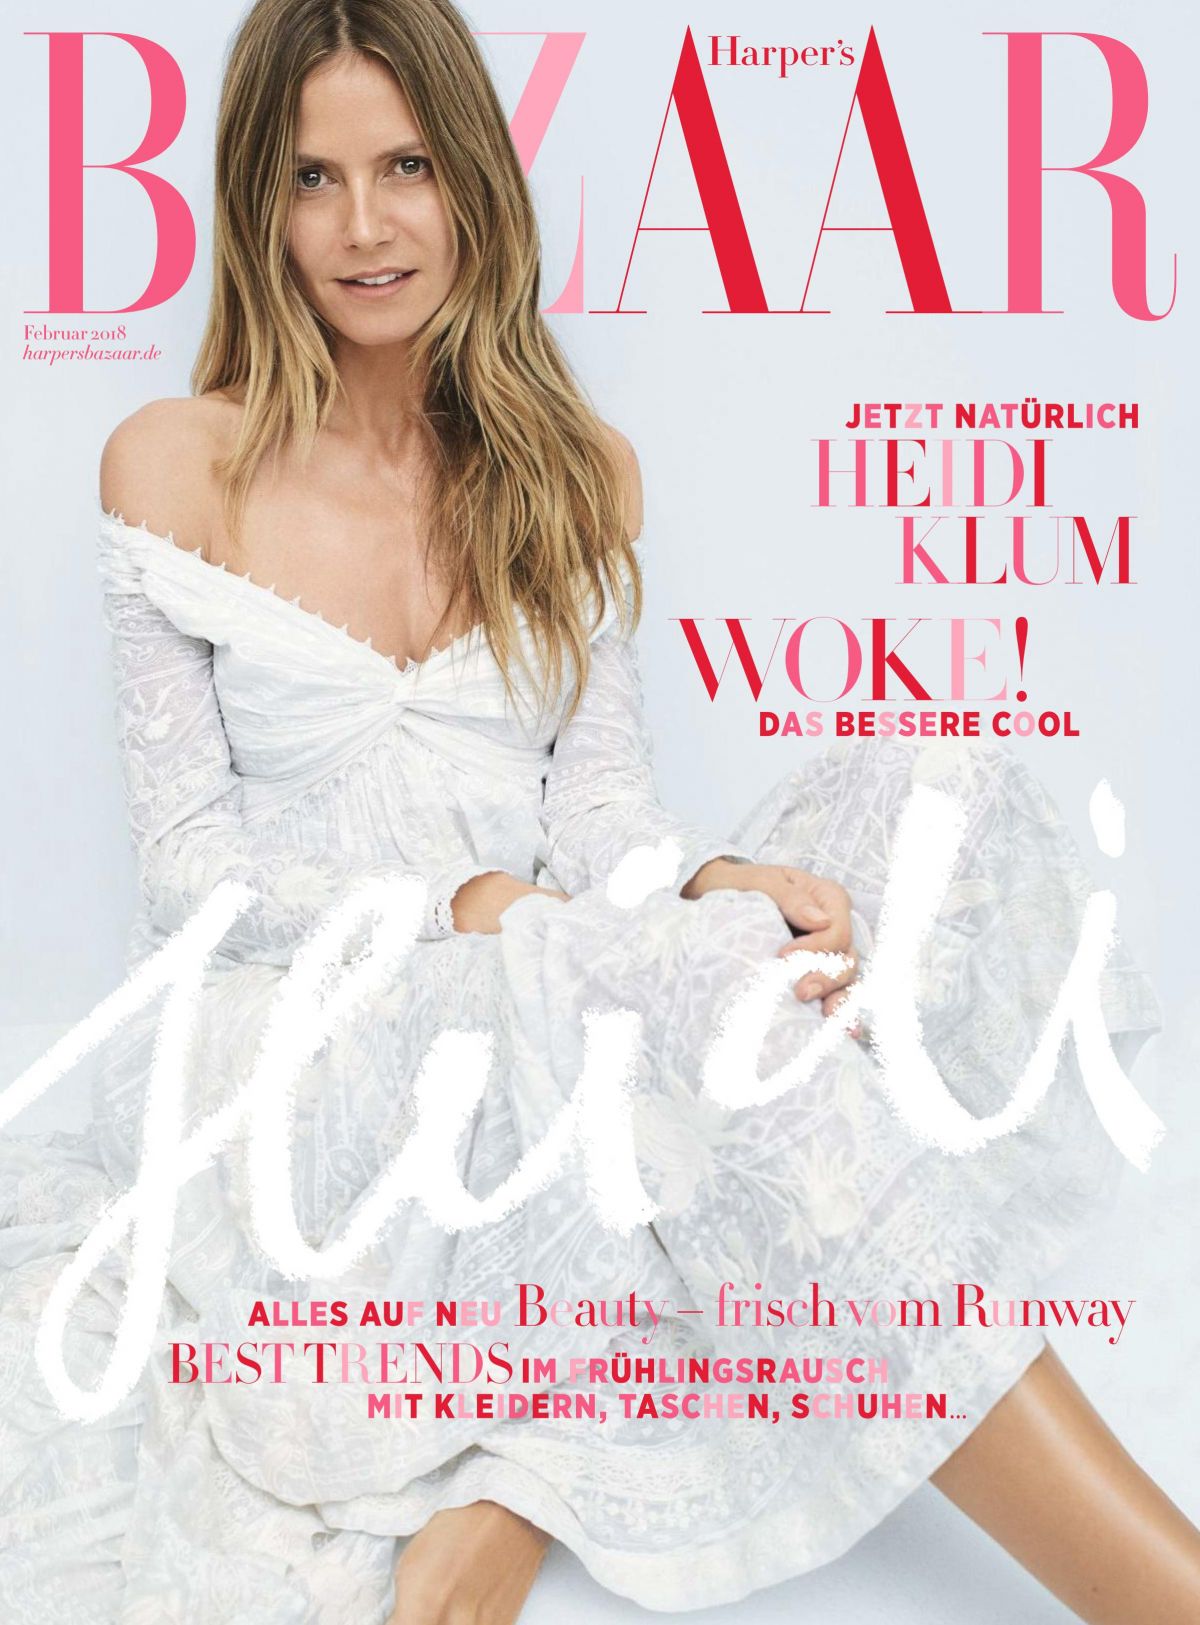 Heidi Klum in Harper’s Bazaar Magazine, Germany February 2018